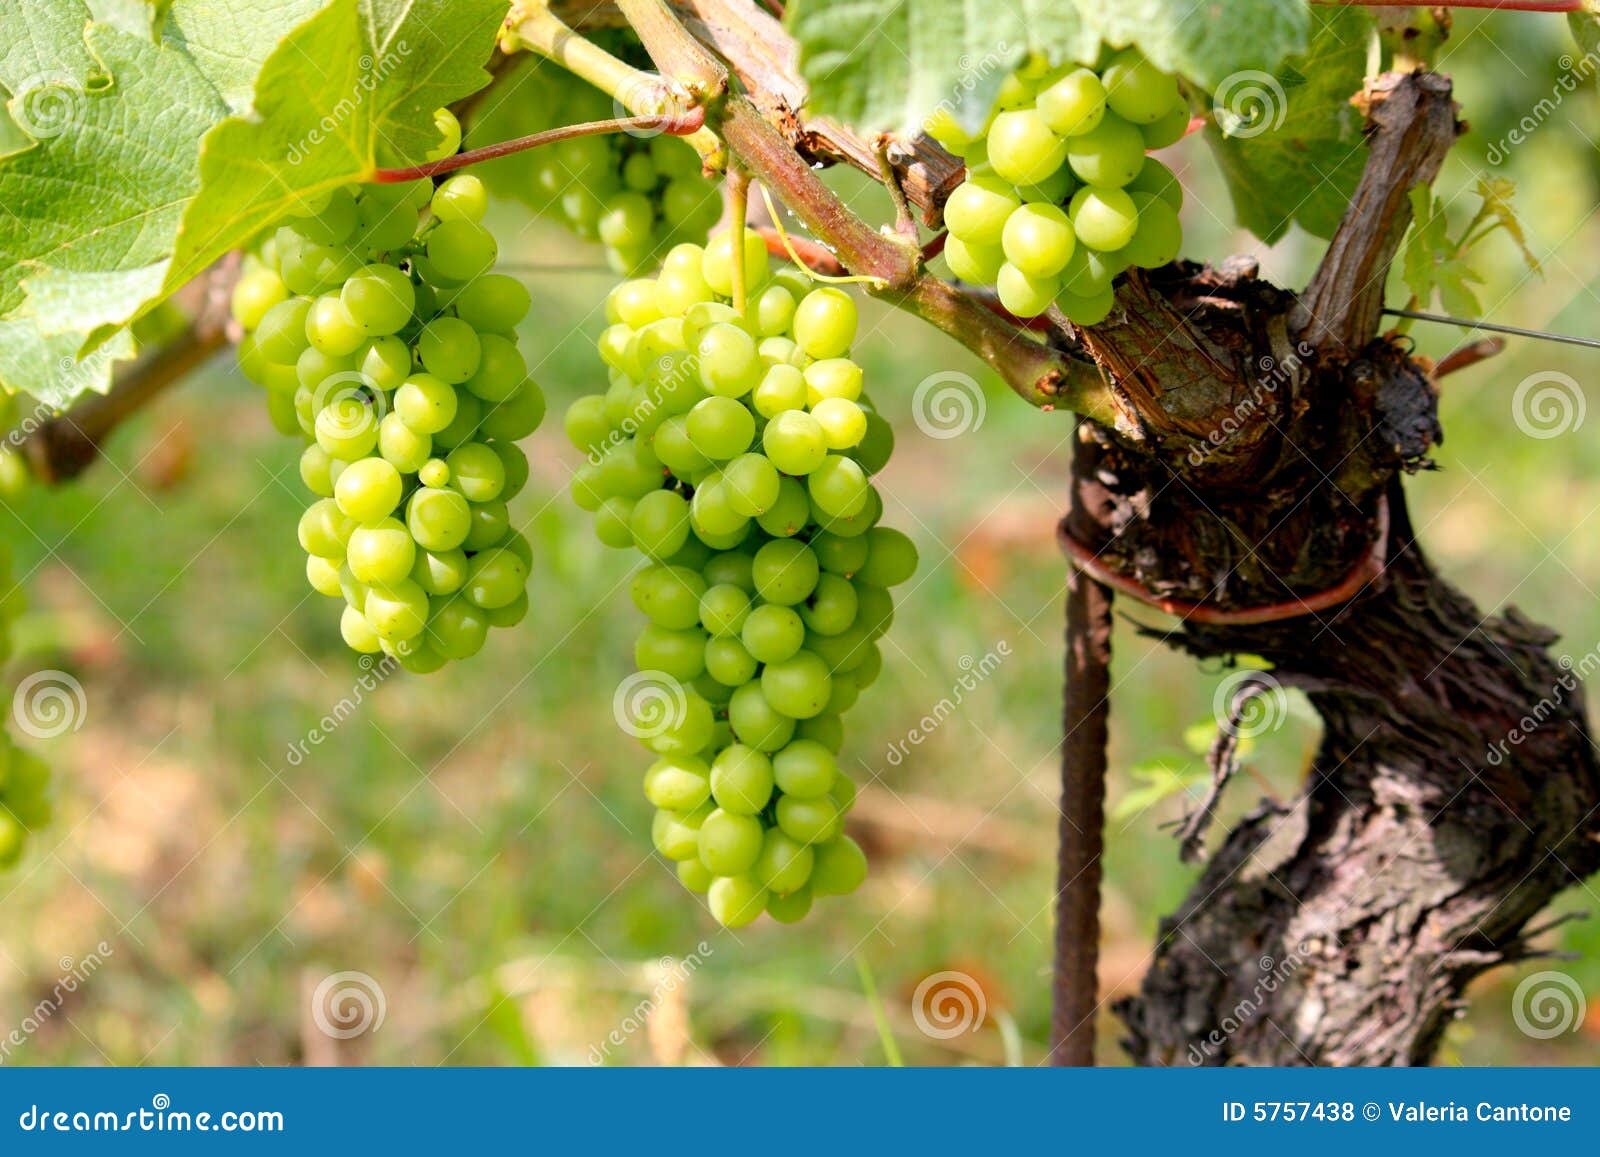 barolo grapes